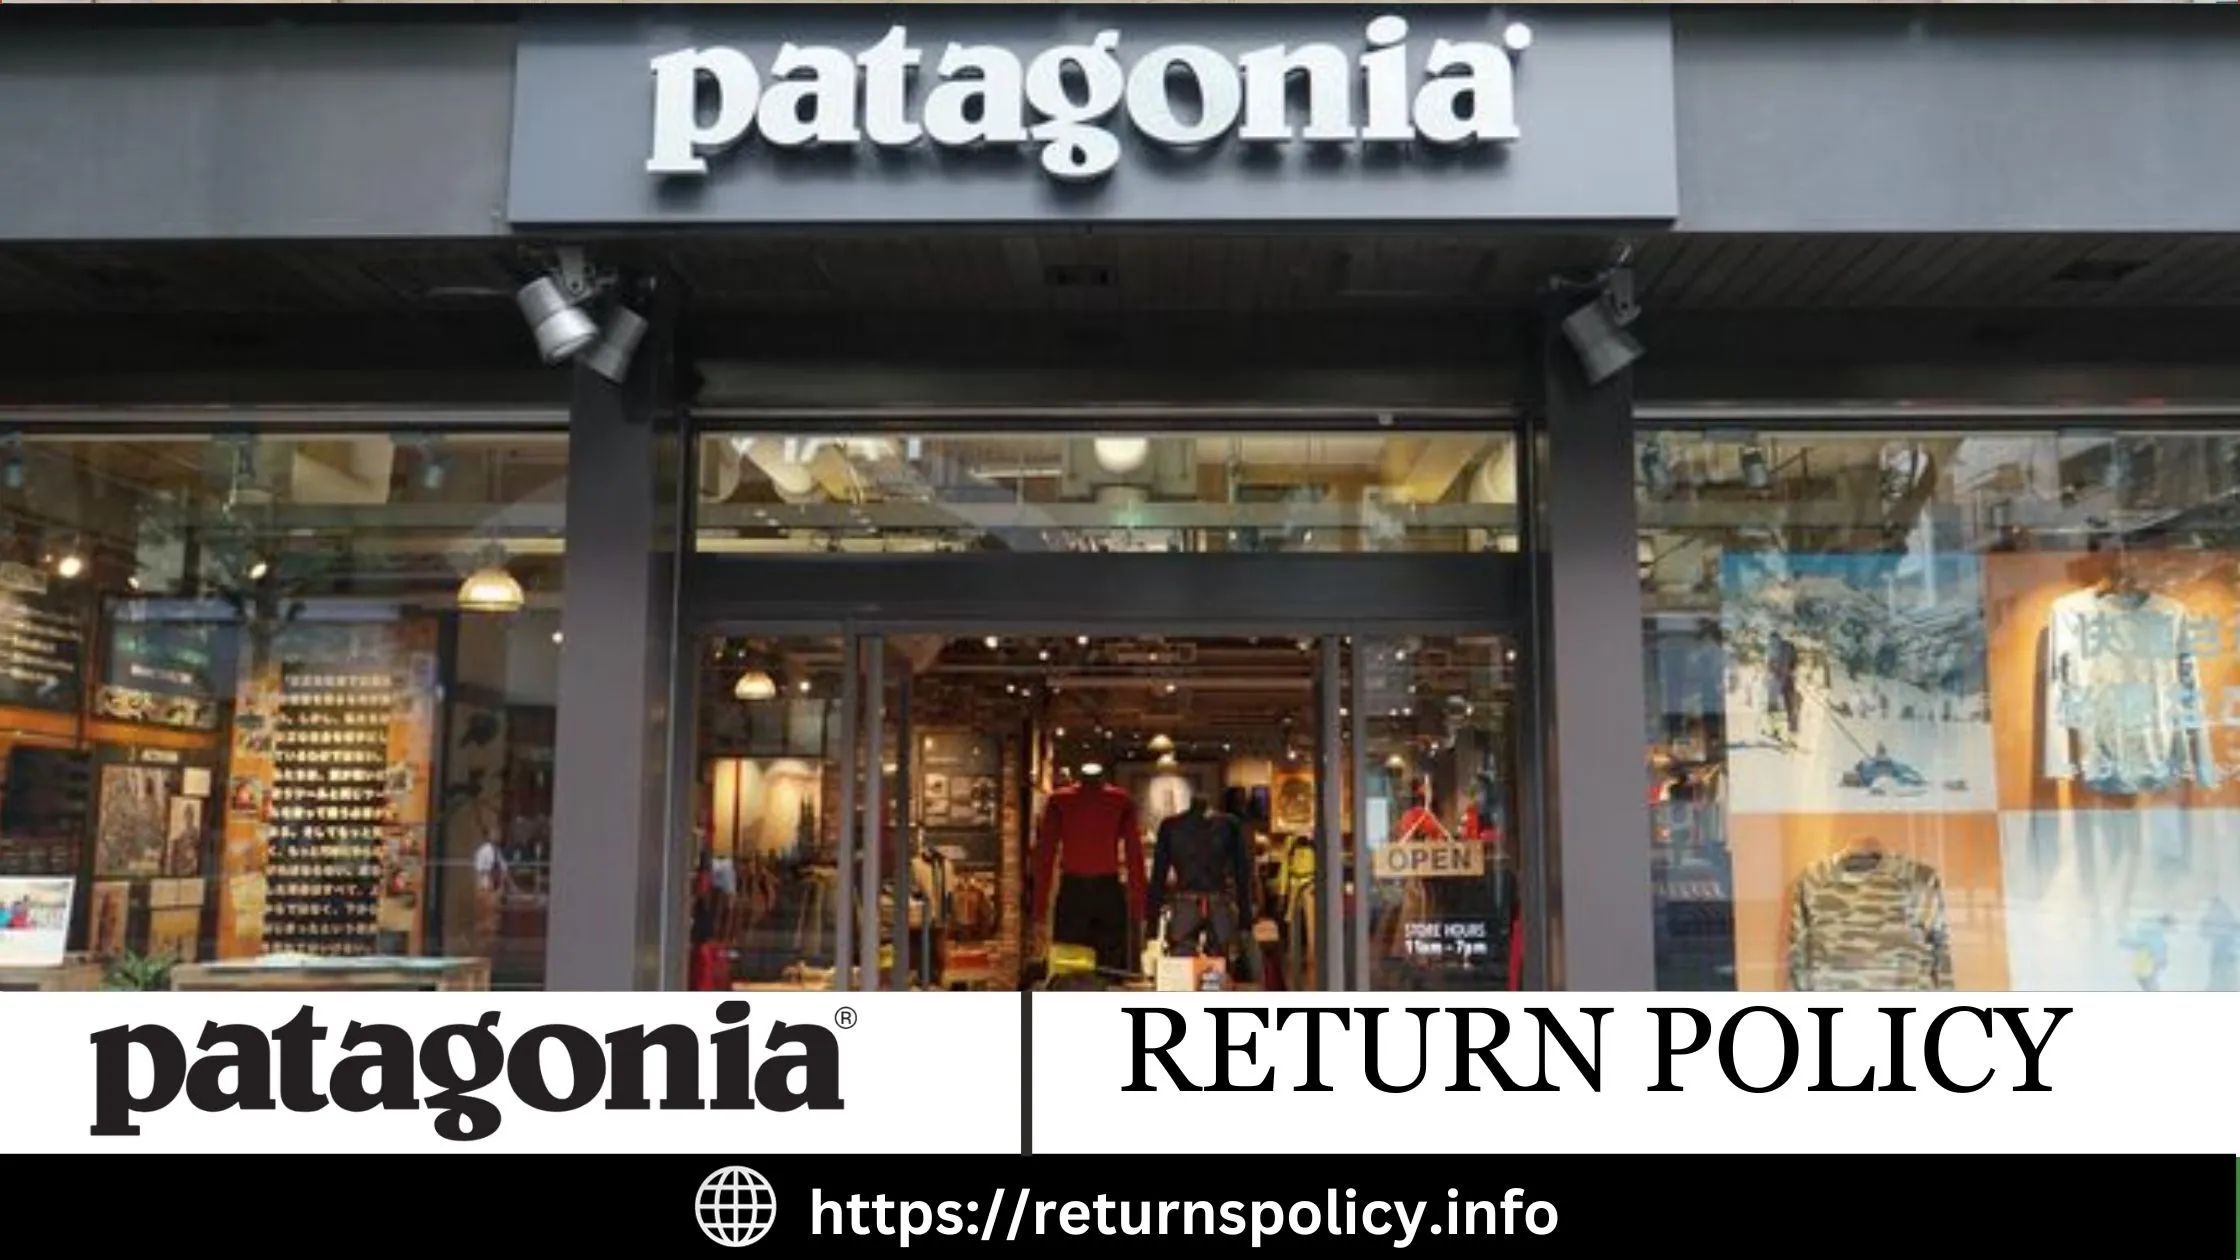 Patagonia Return Policy